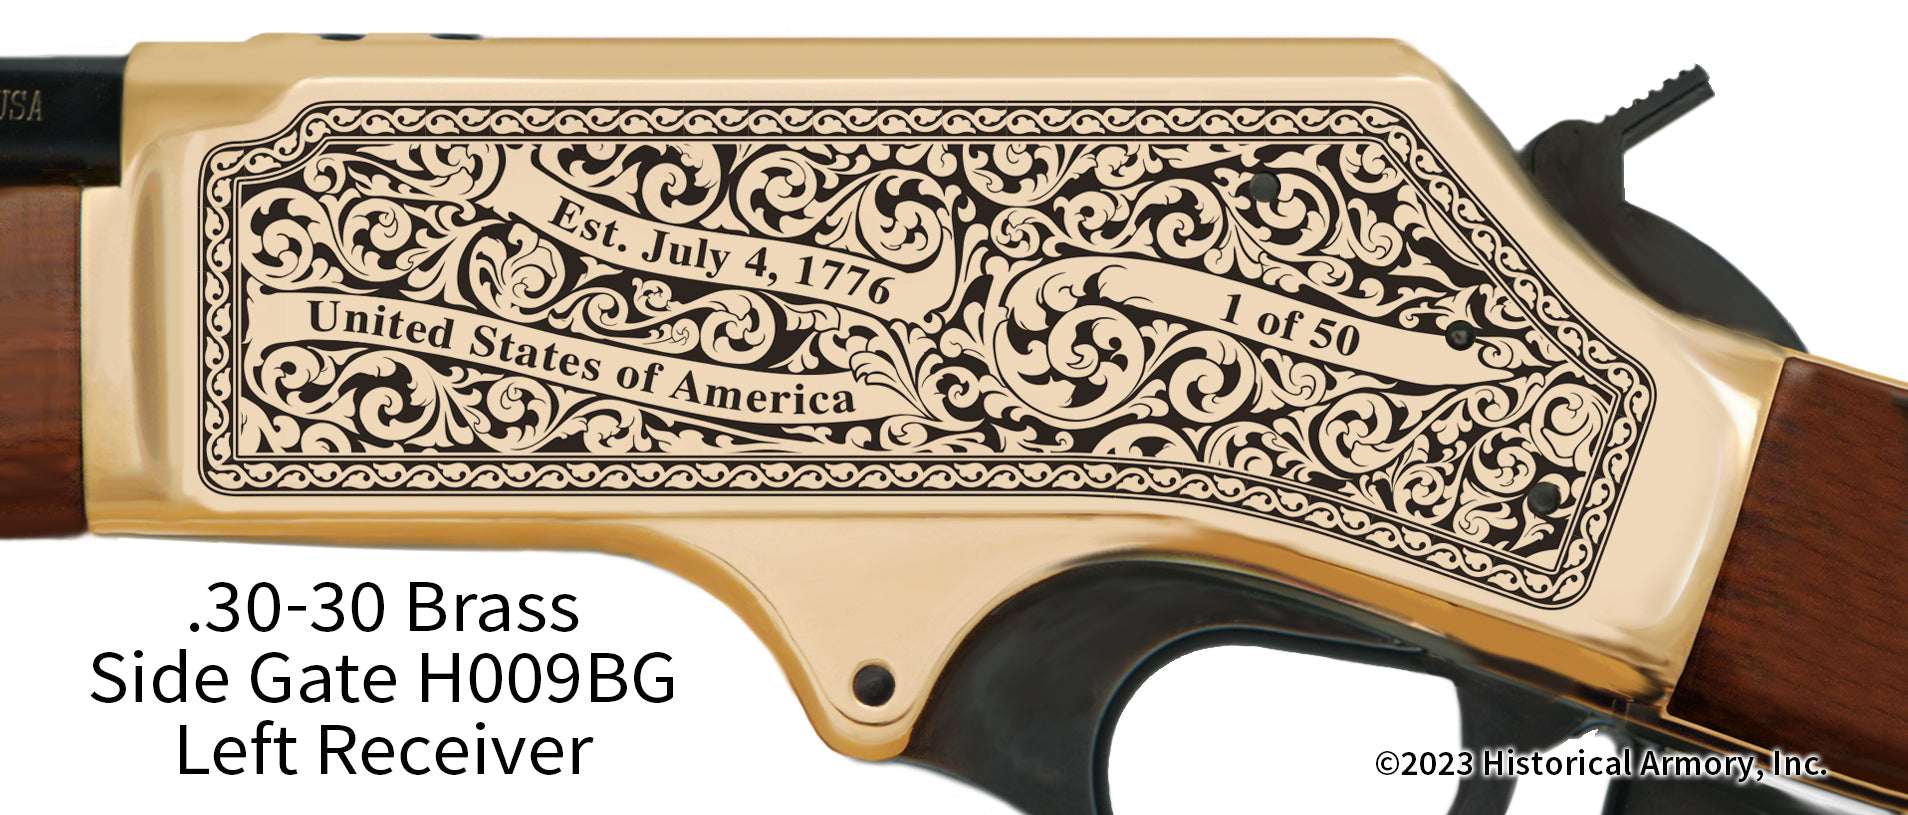 Missoula County Montana Engraved Henry .30-30 Brass Side Gate Rifle